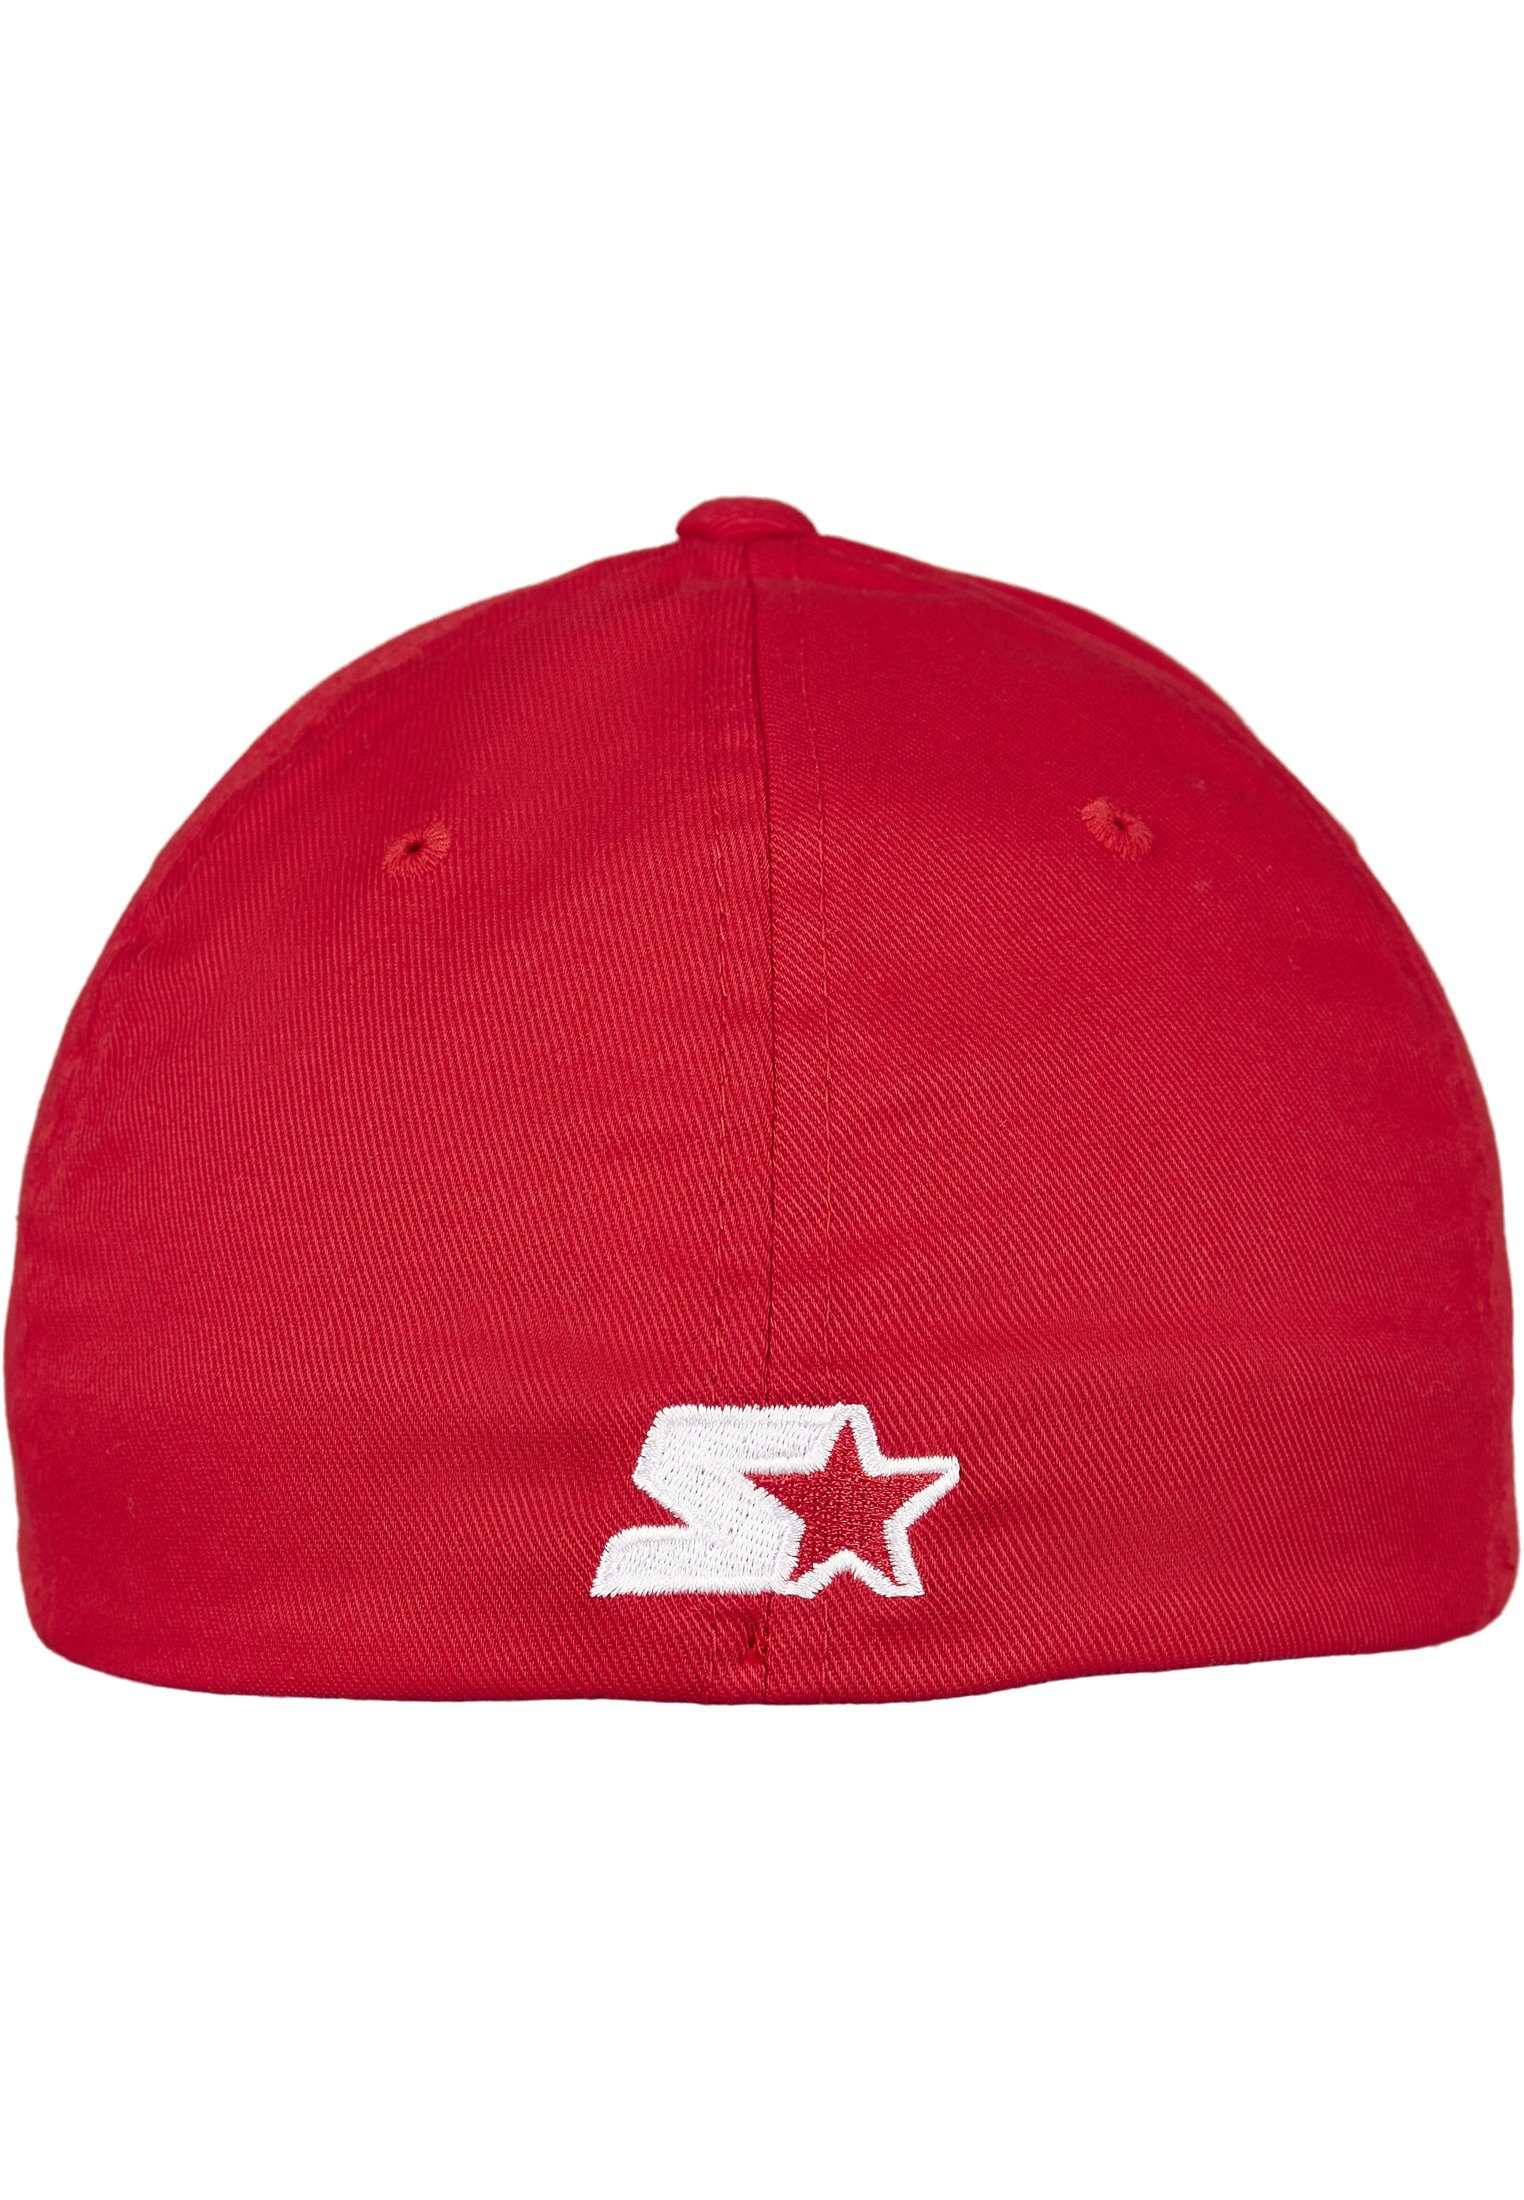 Starter Black Label Flex Cap Cap Chicago Flexfit red Starter Herren